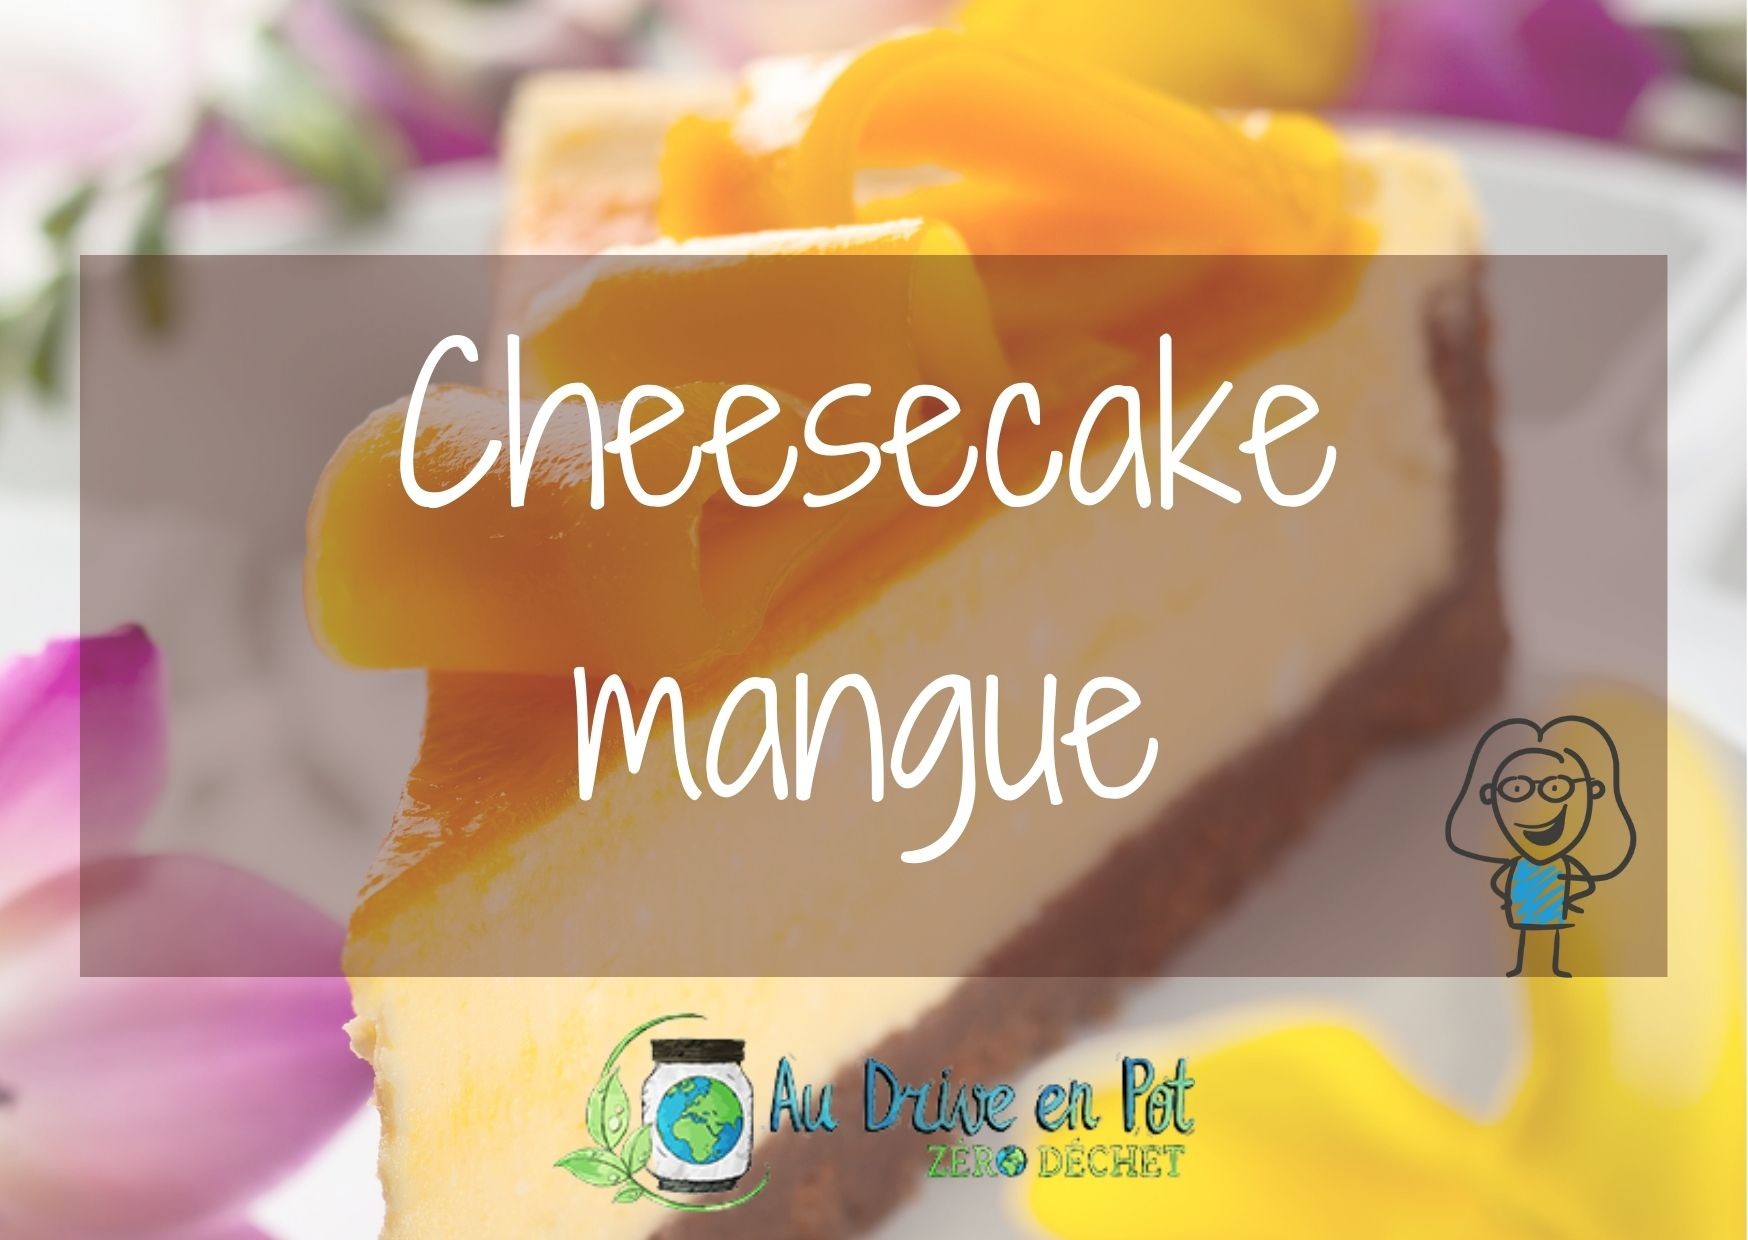 Cheesecake mangue by "ETIC MIAM"